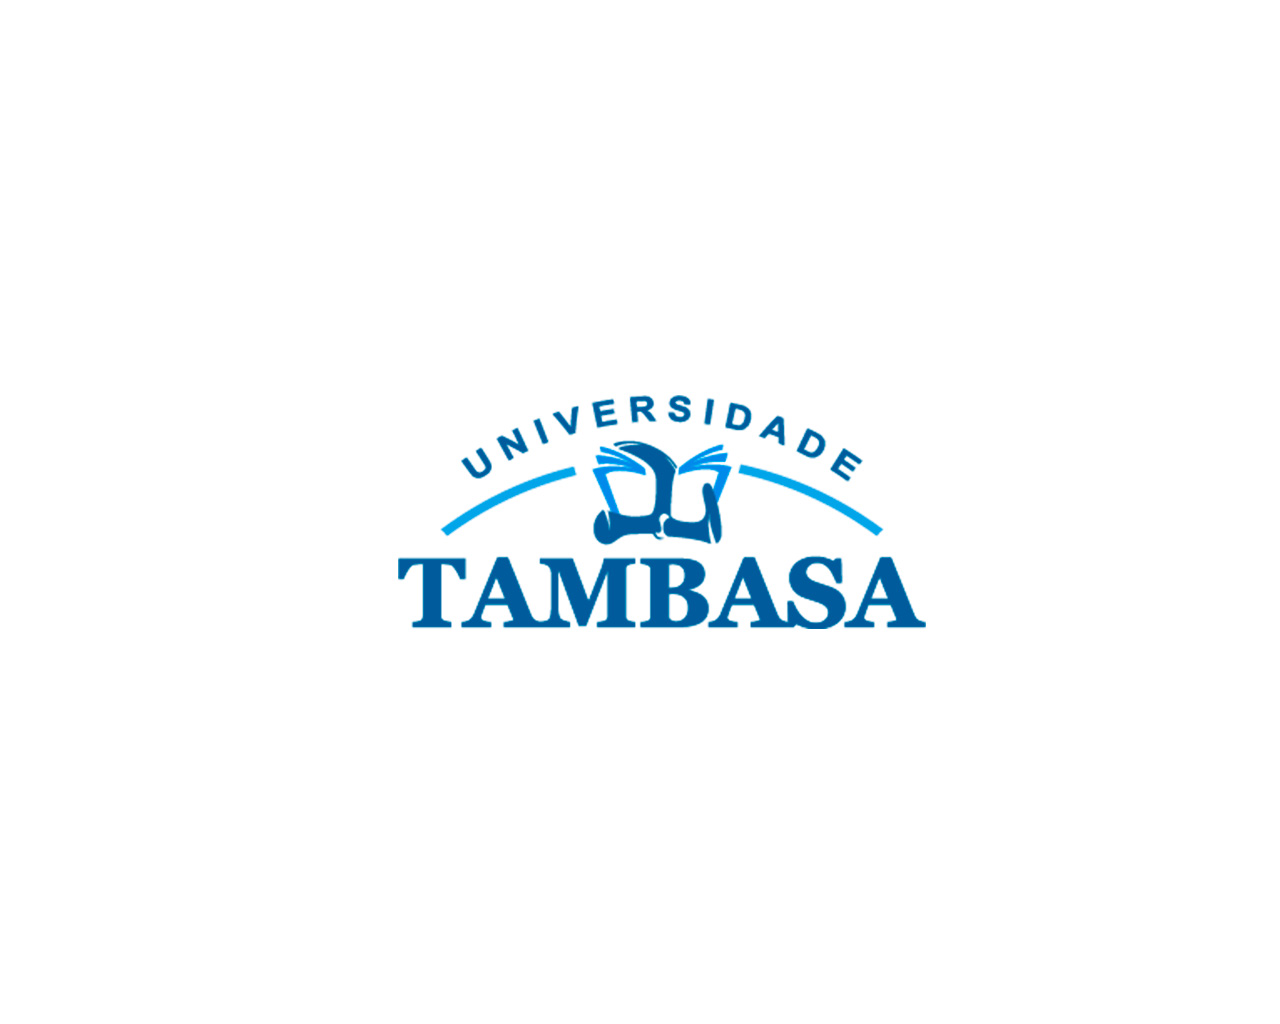 Universidade Tambasa